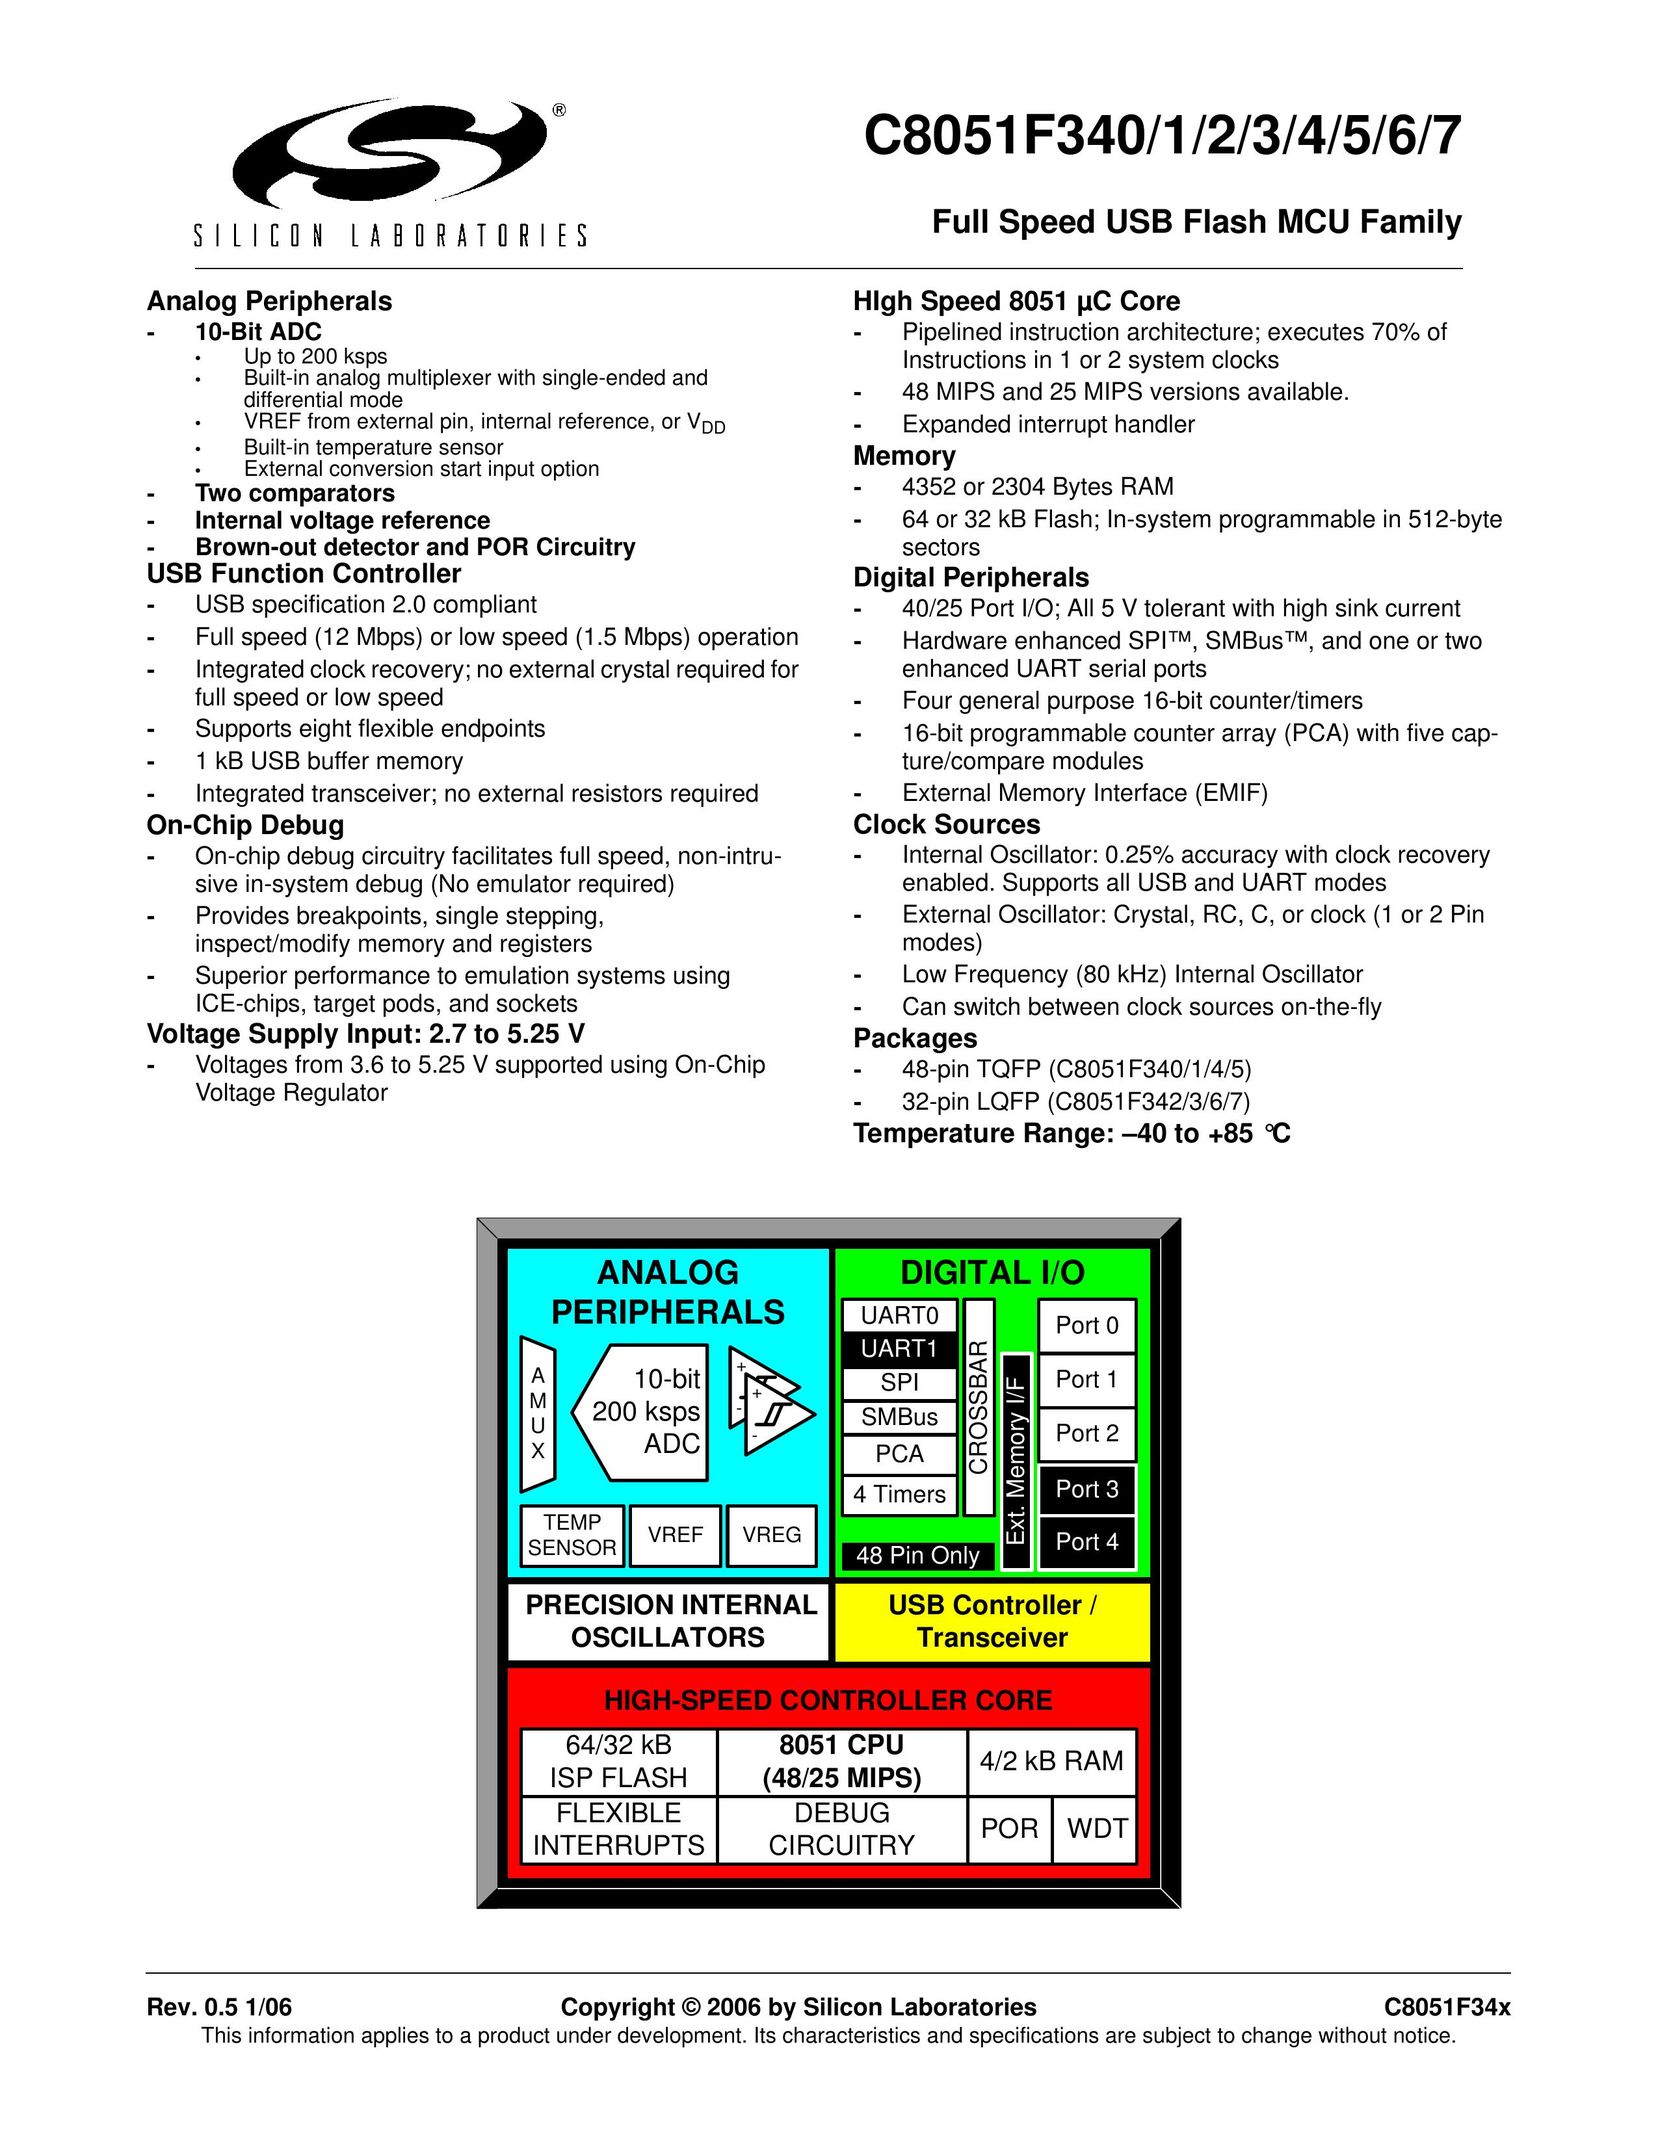 Silicon Laboratories C8051F341 Two-Way Radio User Manual